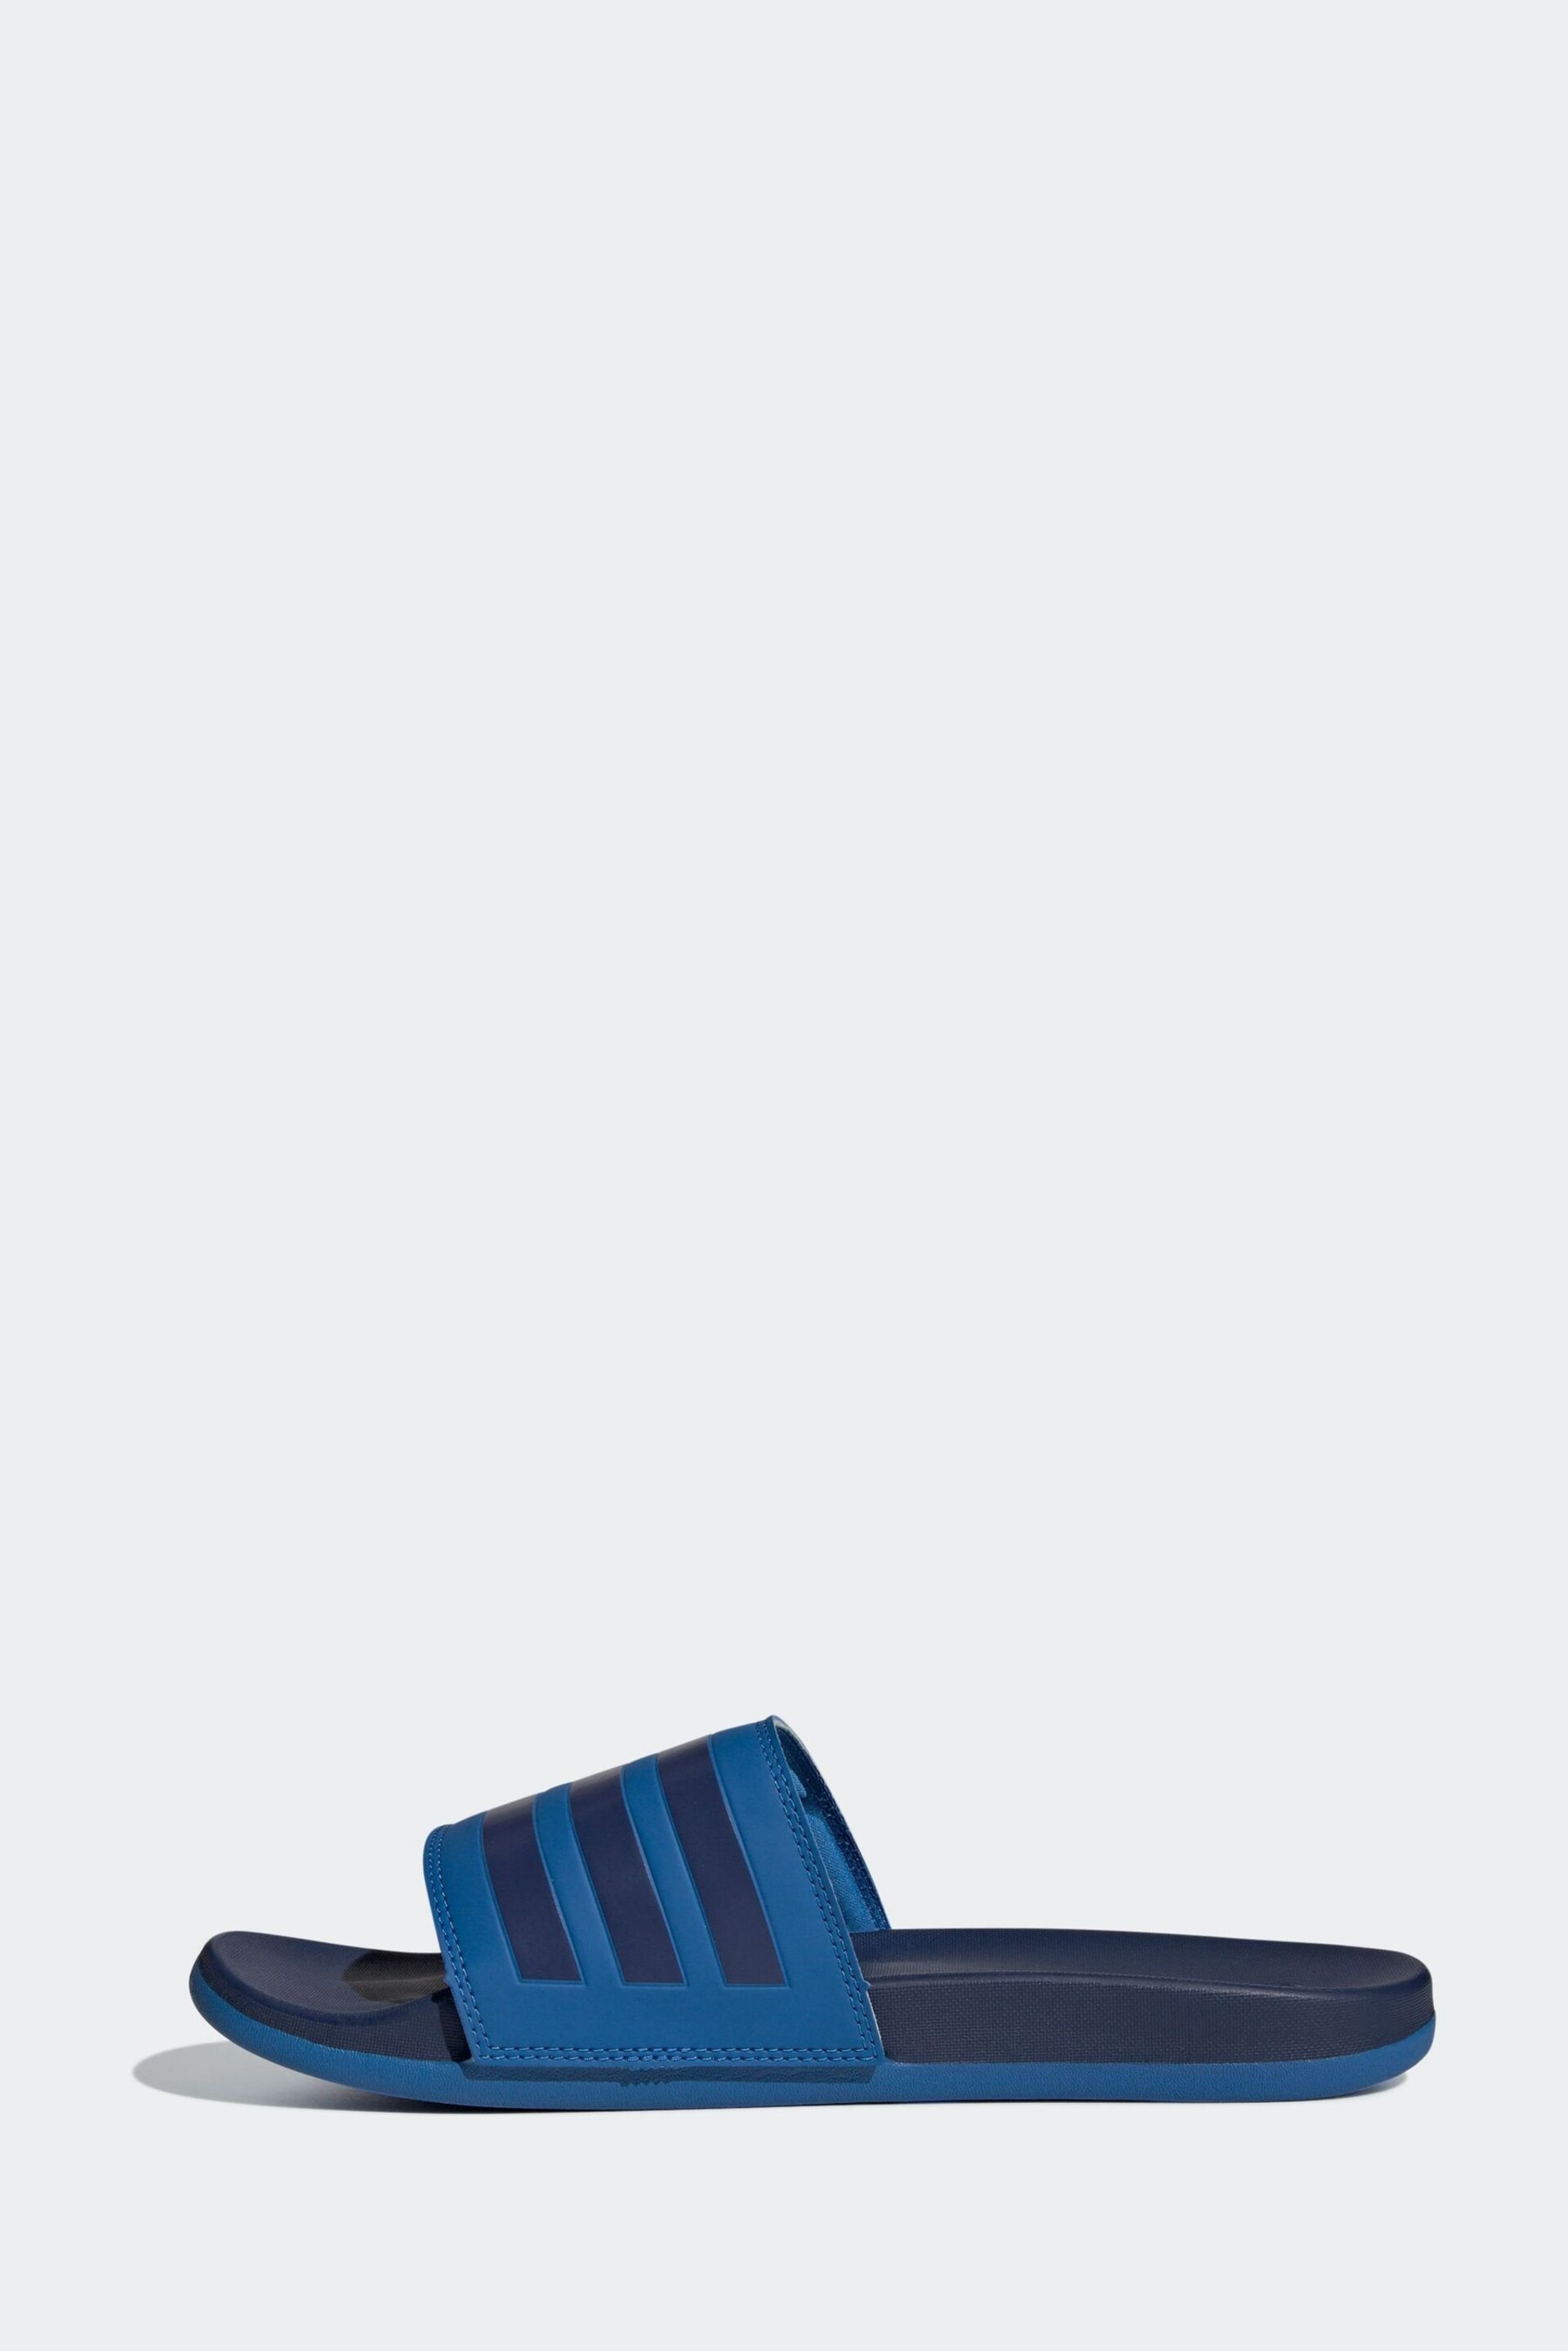 adidas Blue Sportswear Adilette Comfort Slides - Image 4 of 9